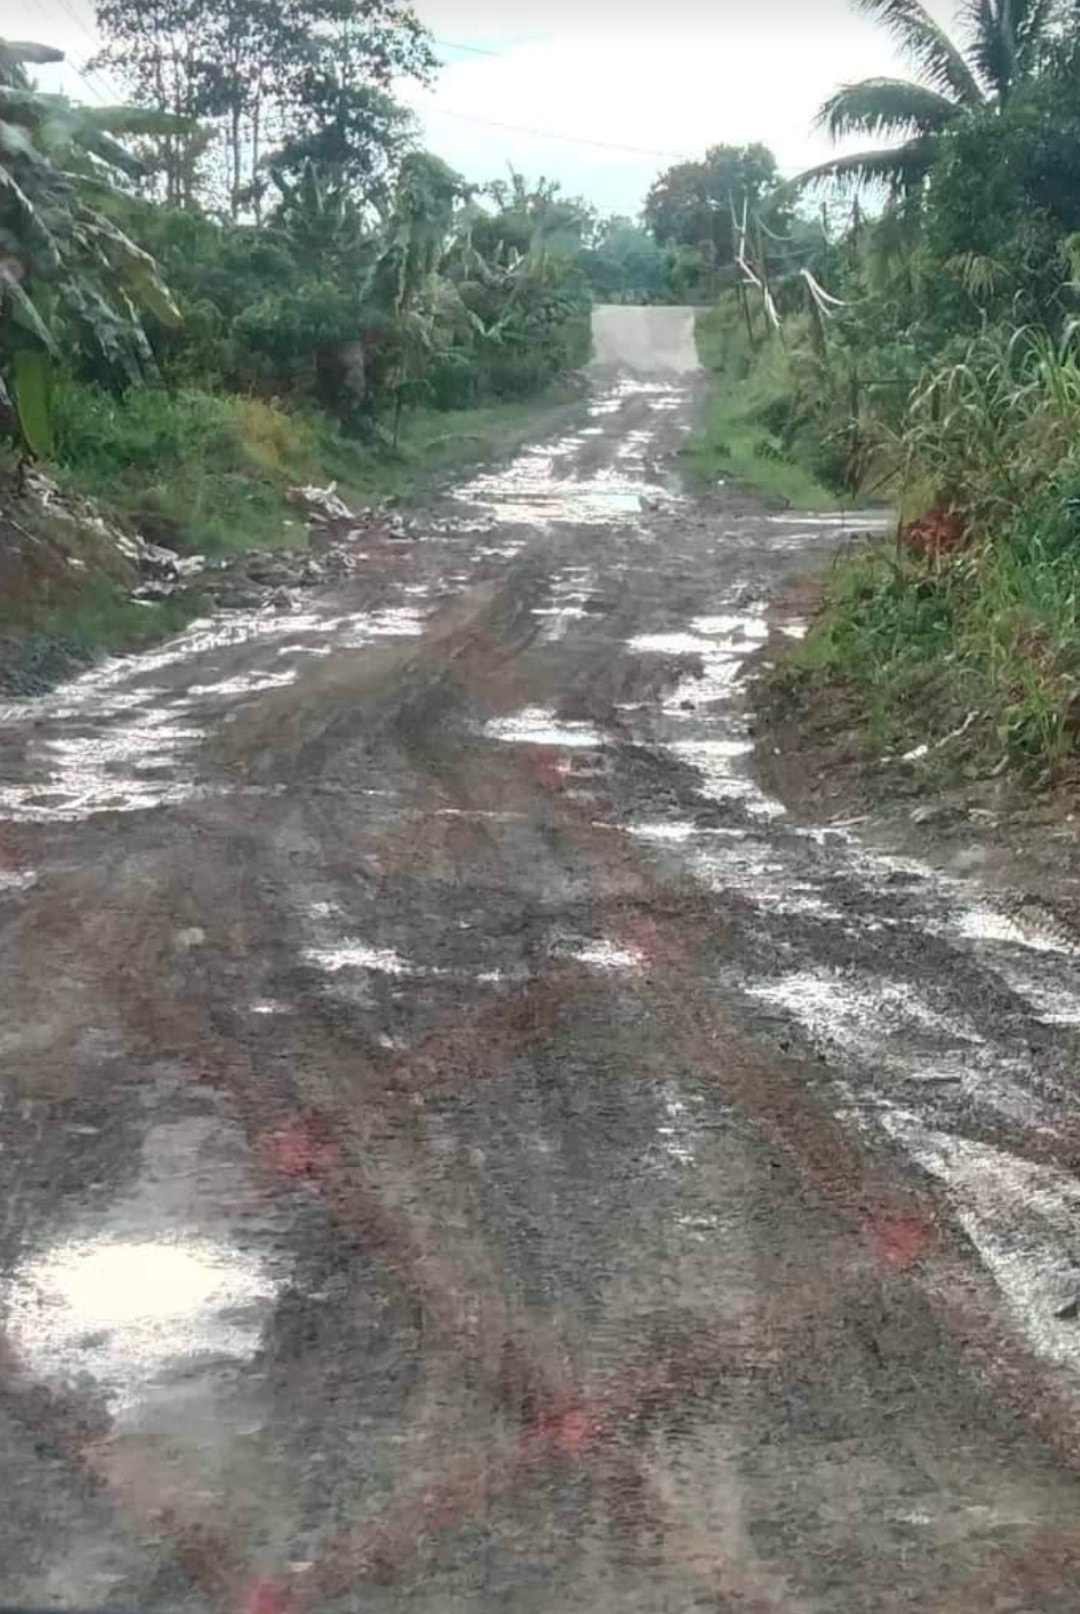 Residents of a Sandakan village have taken to fixing potholes along a local road themselves. Image credit: ISU Sandakan